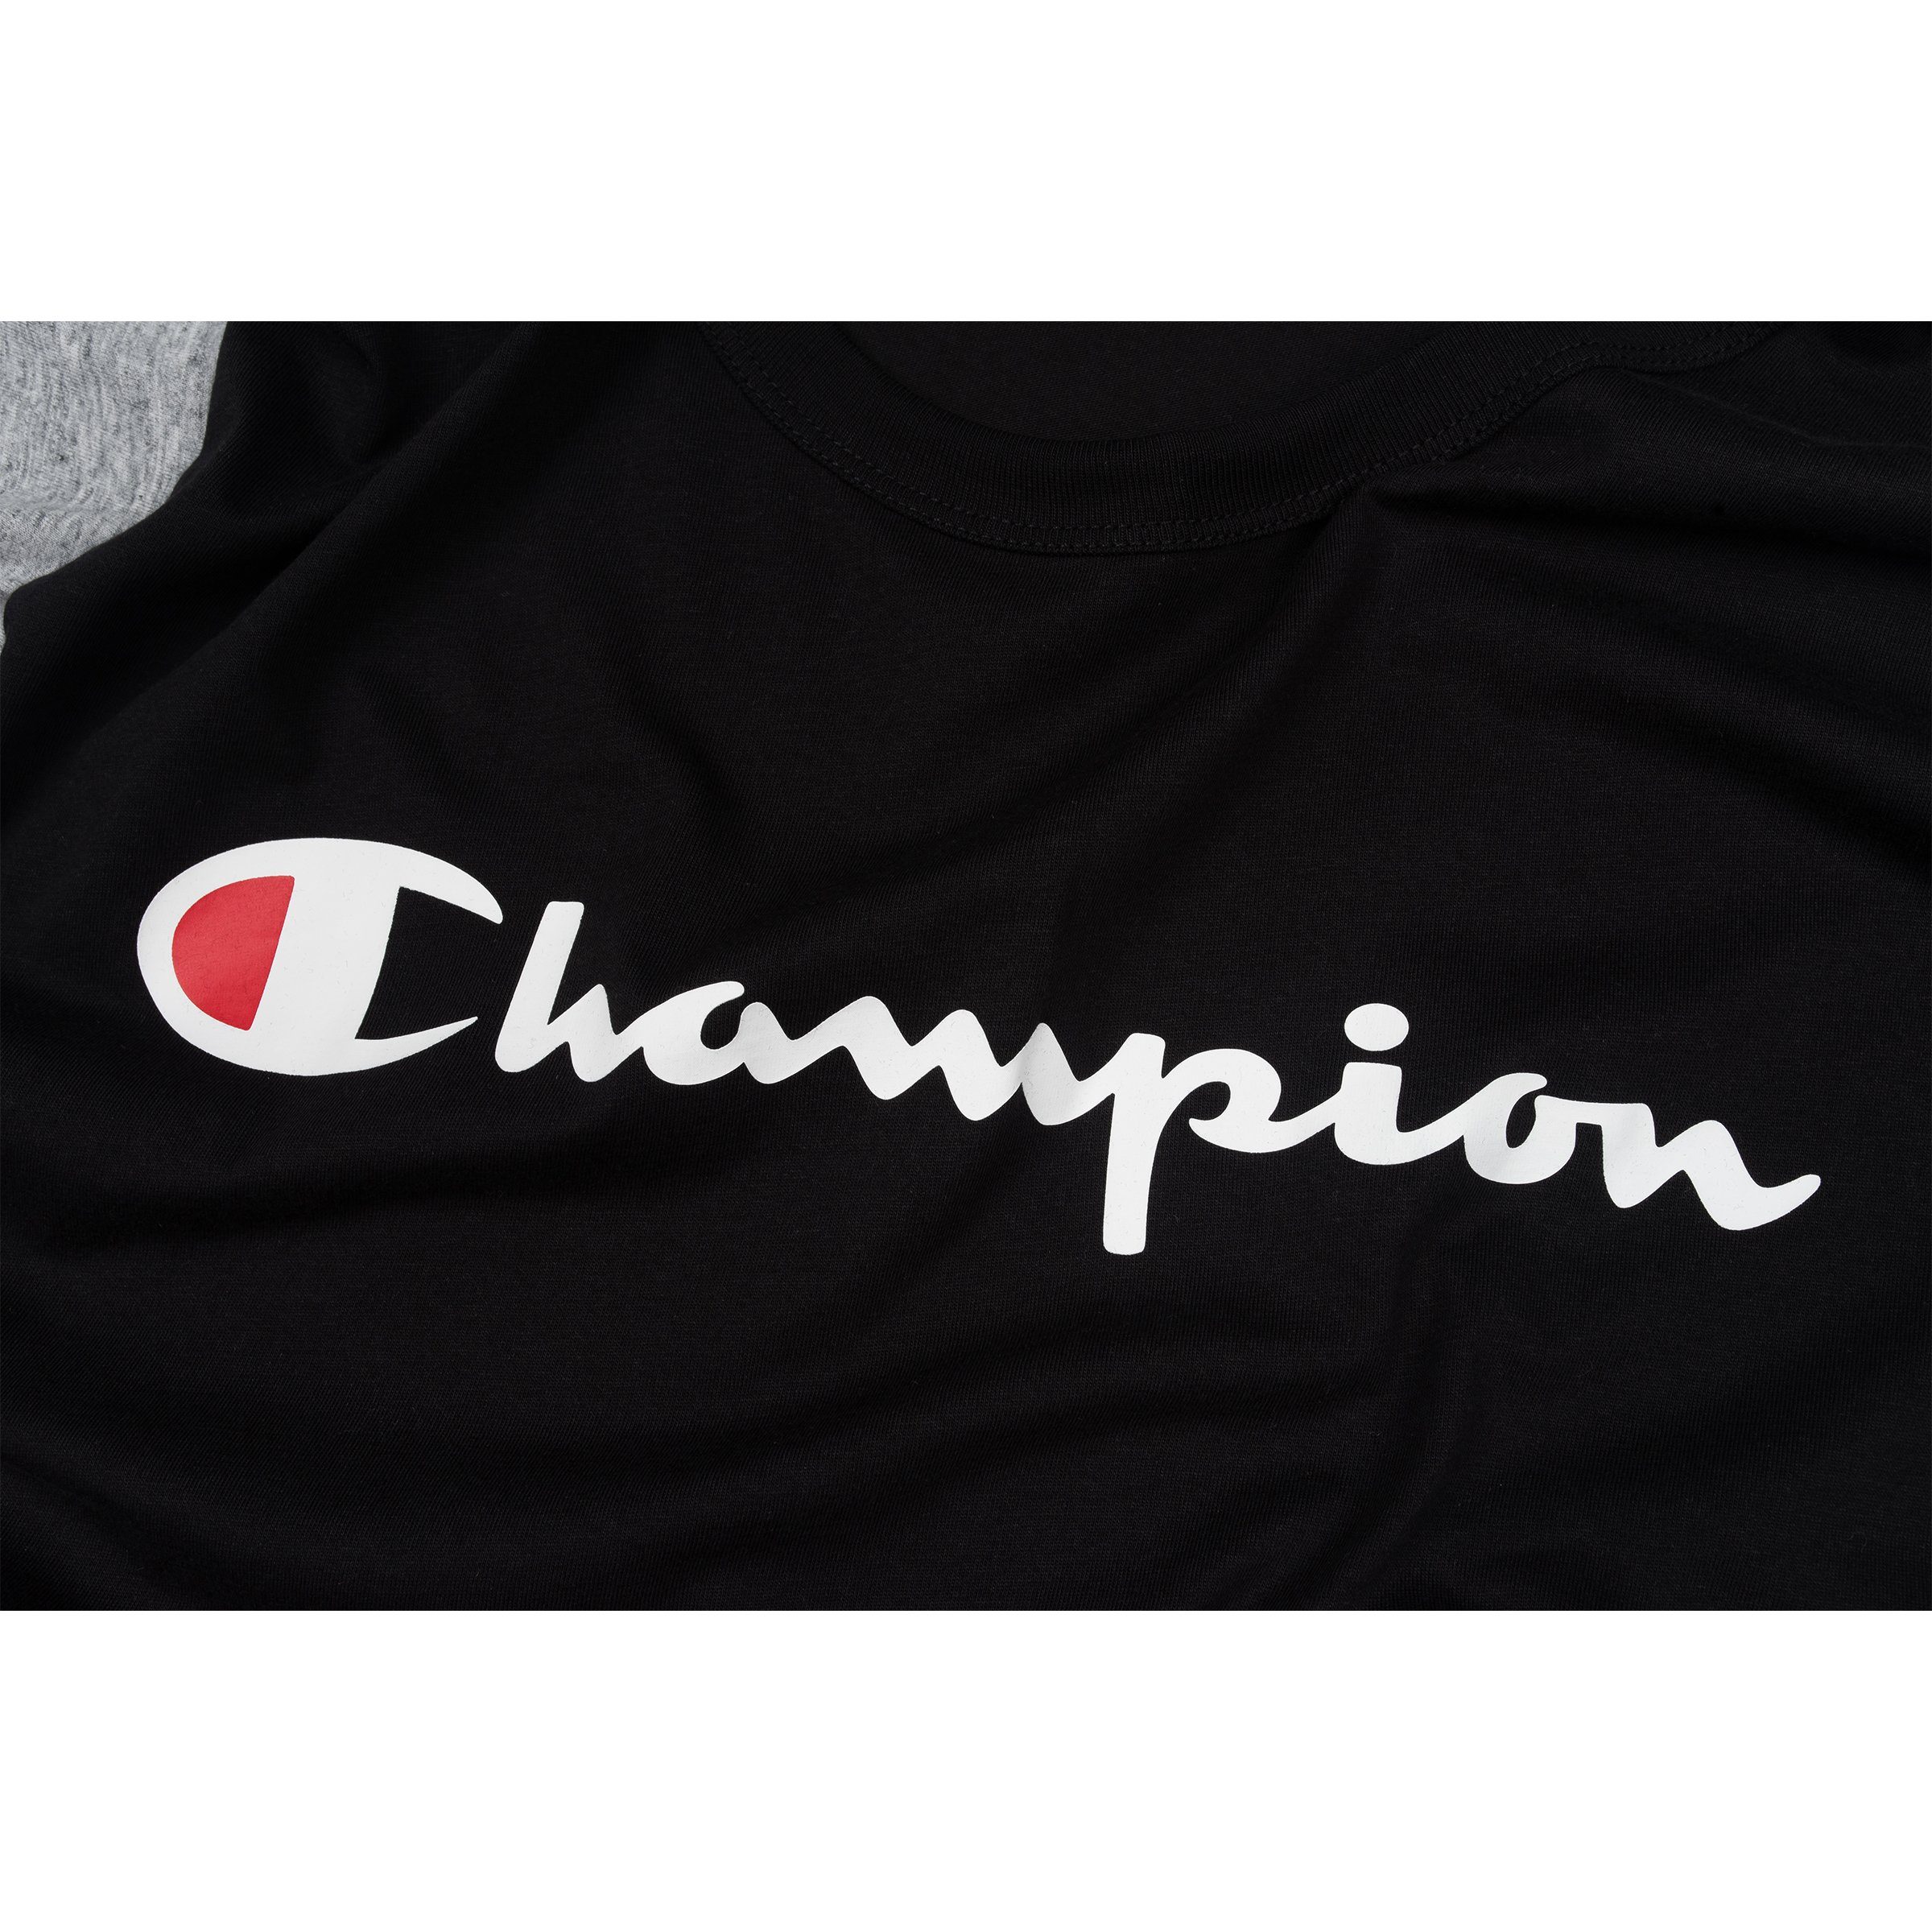 Champion T-Shirt Champion Herren T-Shirt 213644 Adult Crewneck